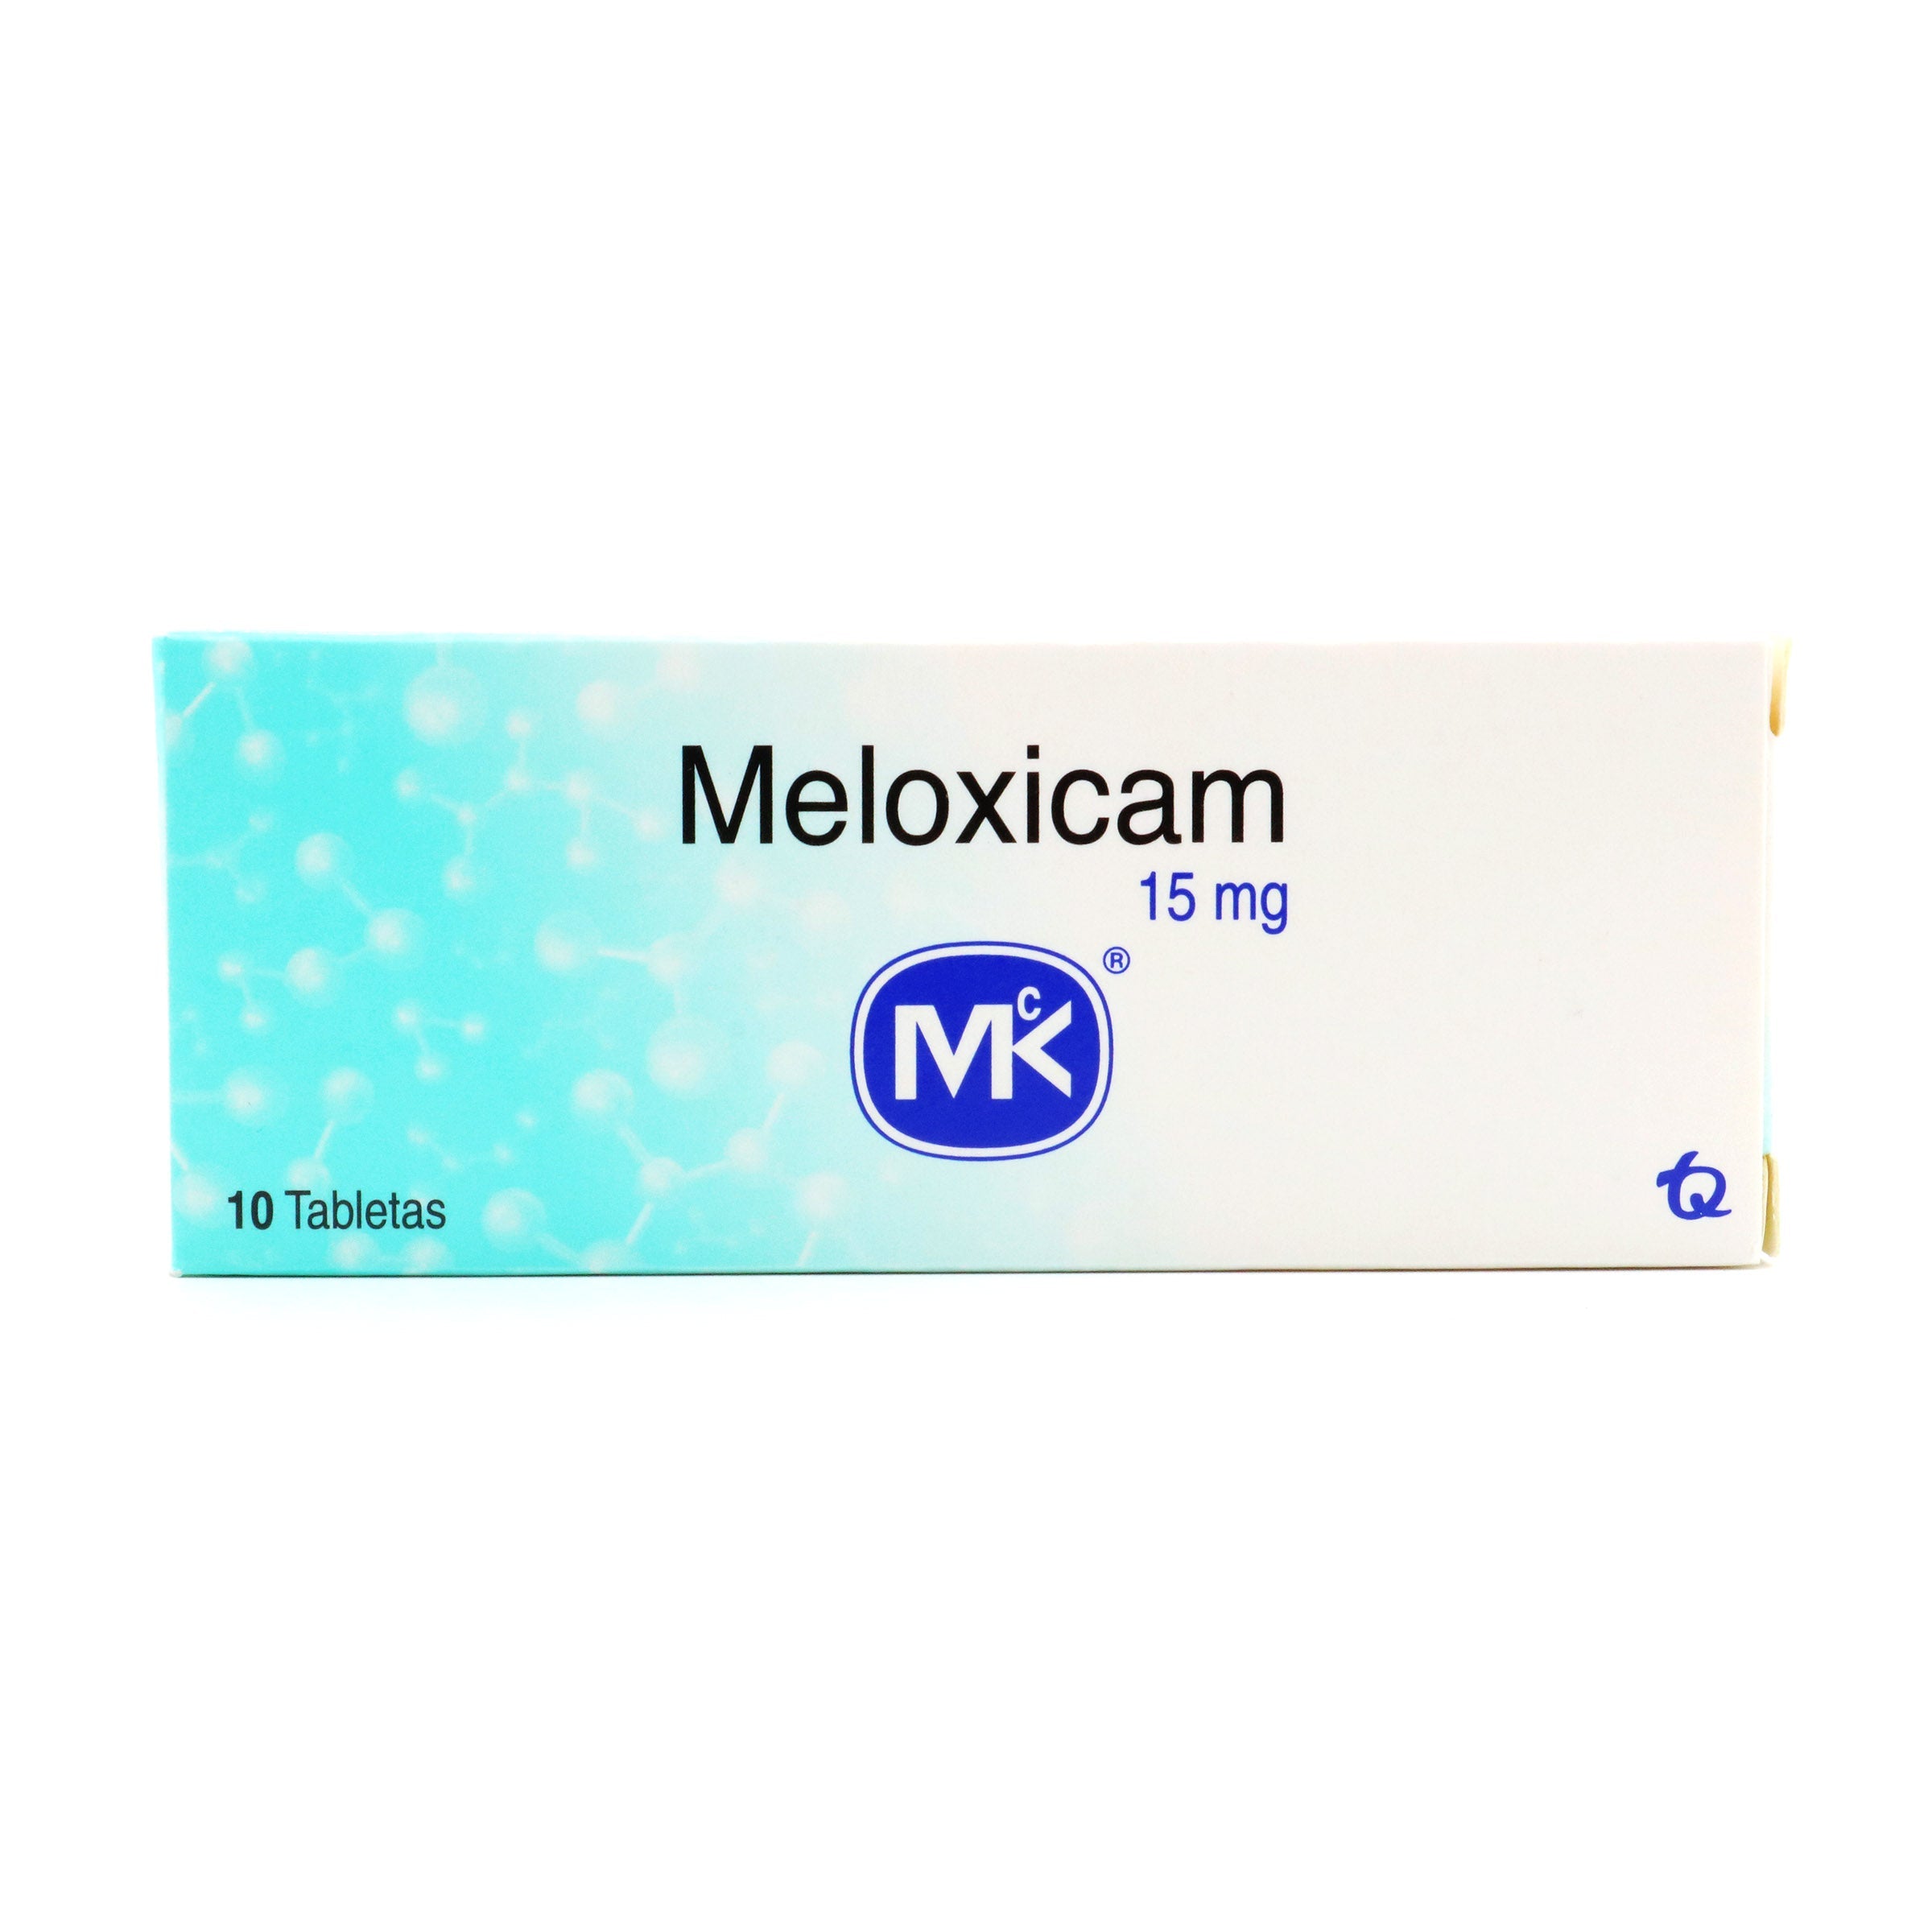 MELOXICAM 15 MG 10 TABLETAS MK